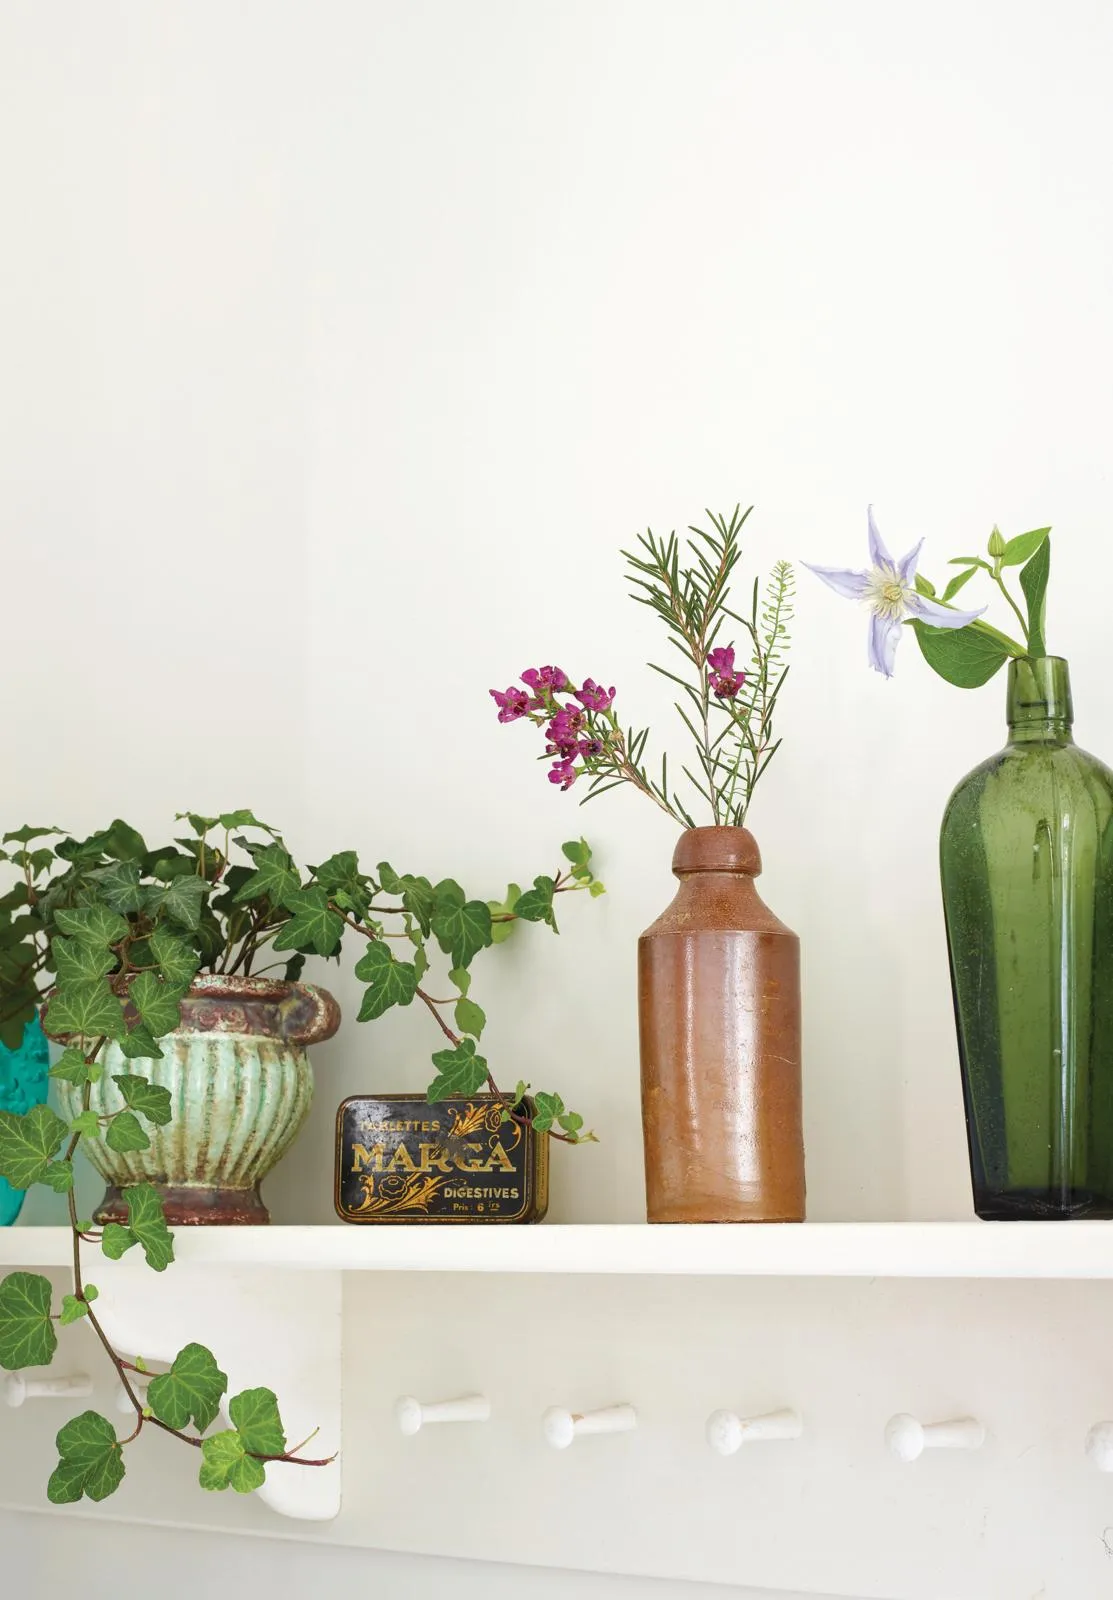 North-west London home: vase display on shaker shelf.